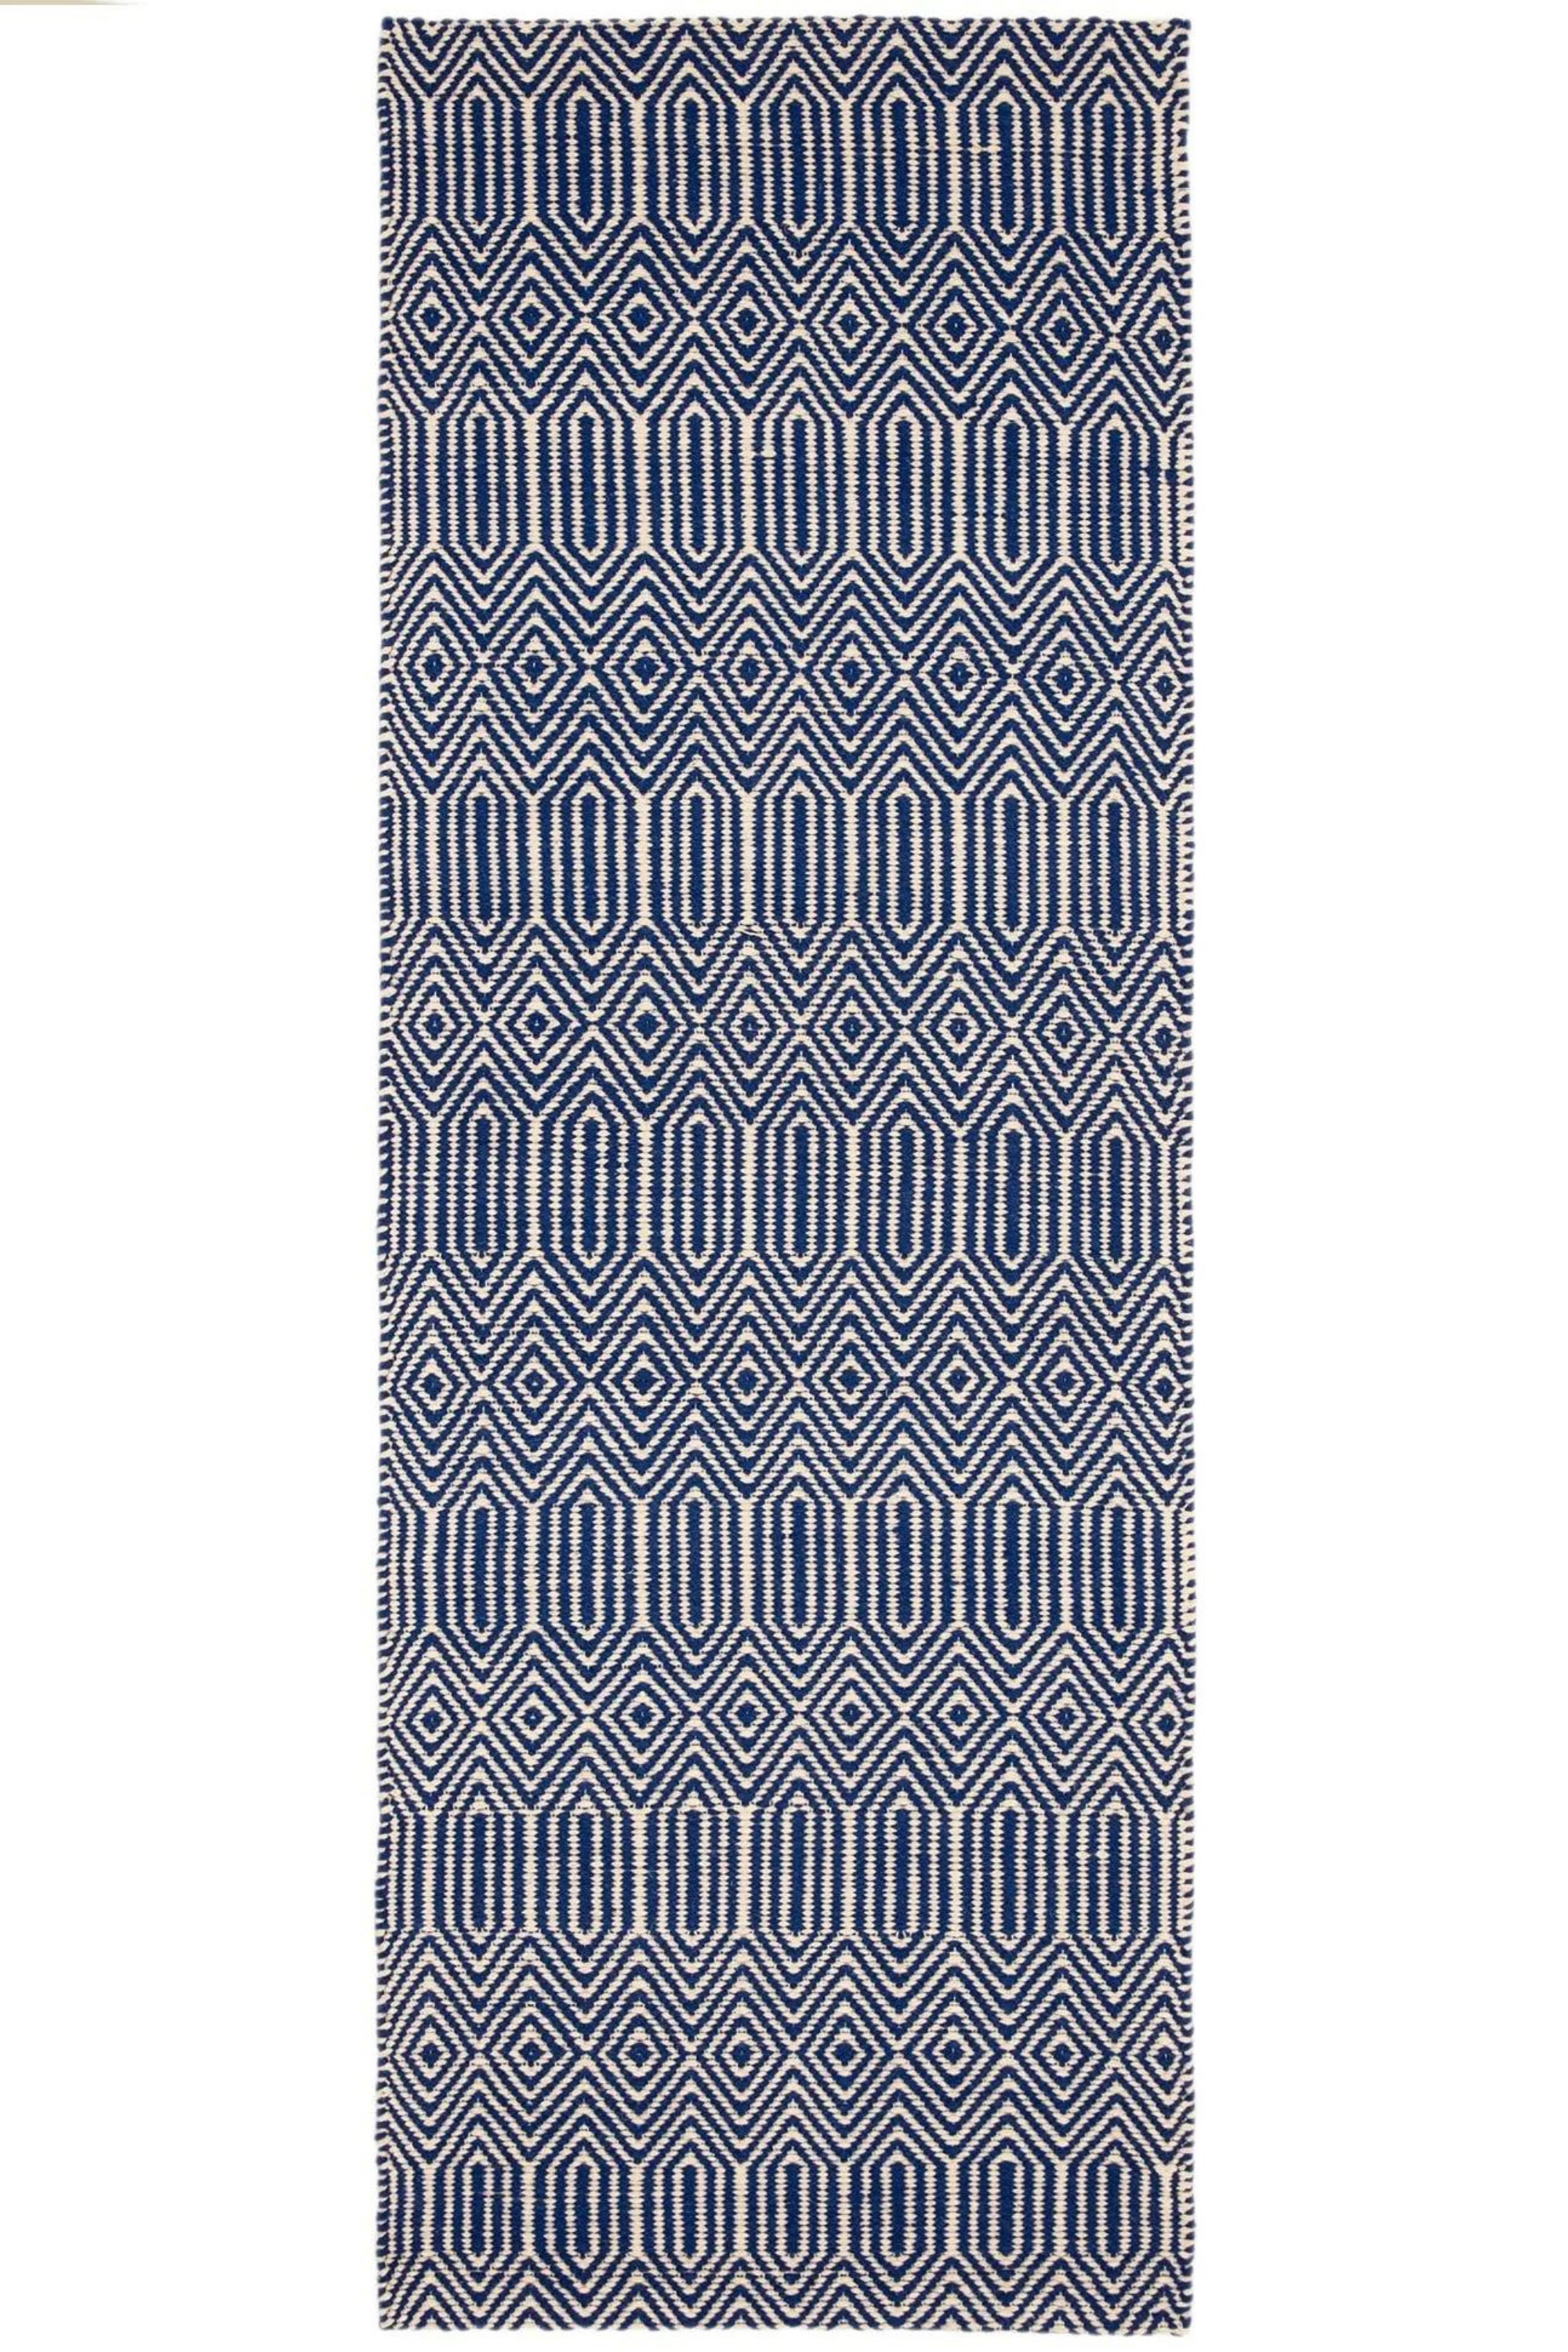 blue and white geometric runner aztec pattern